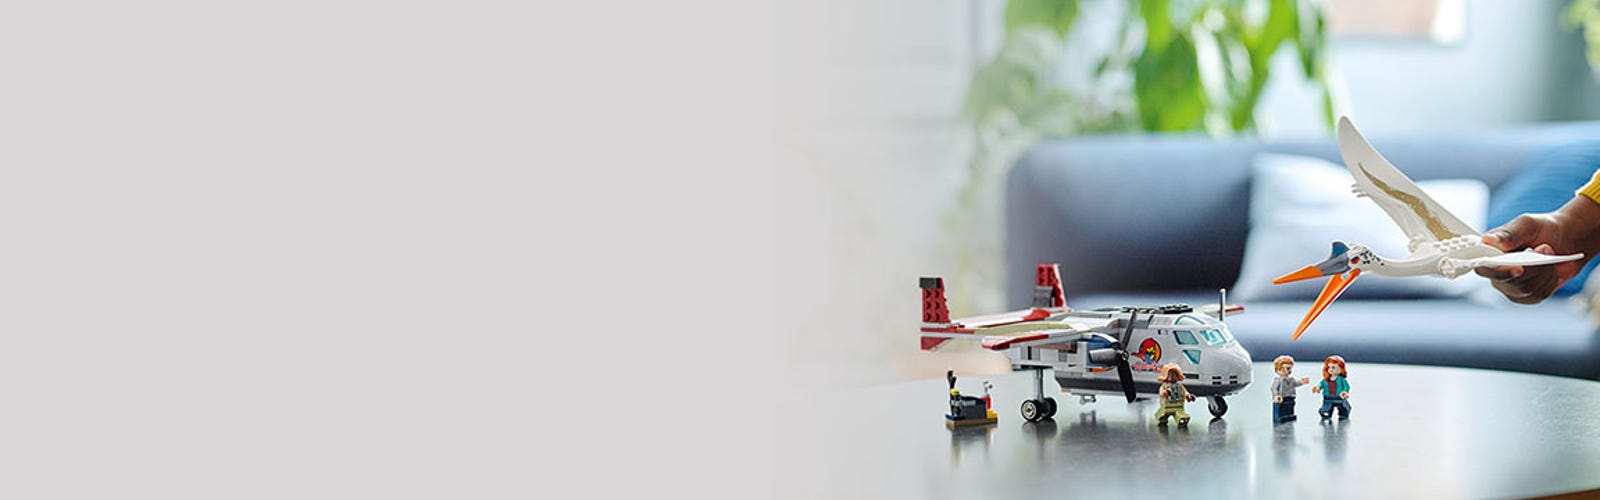 Quetzalcoatlus Plane Ambush 76947 | Jurassic World™ | Buy online at the  Official LEGO® Shop US